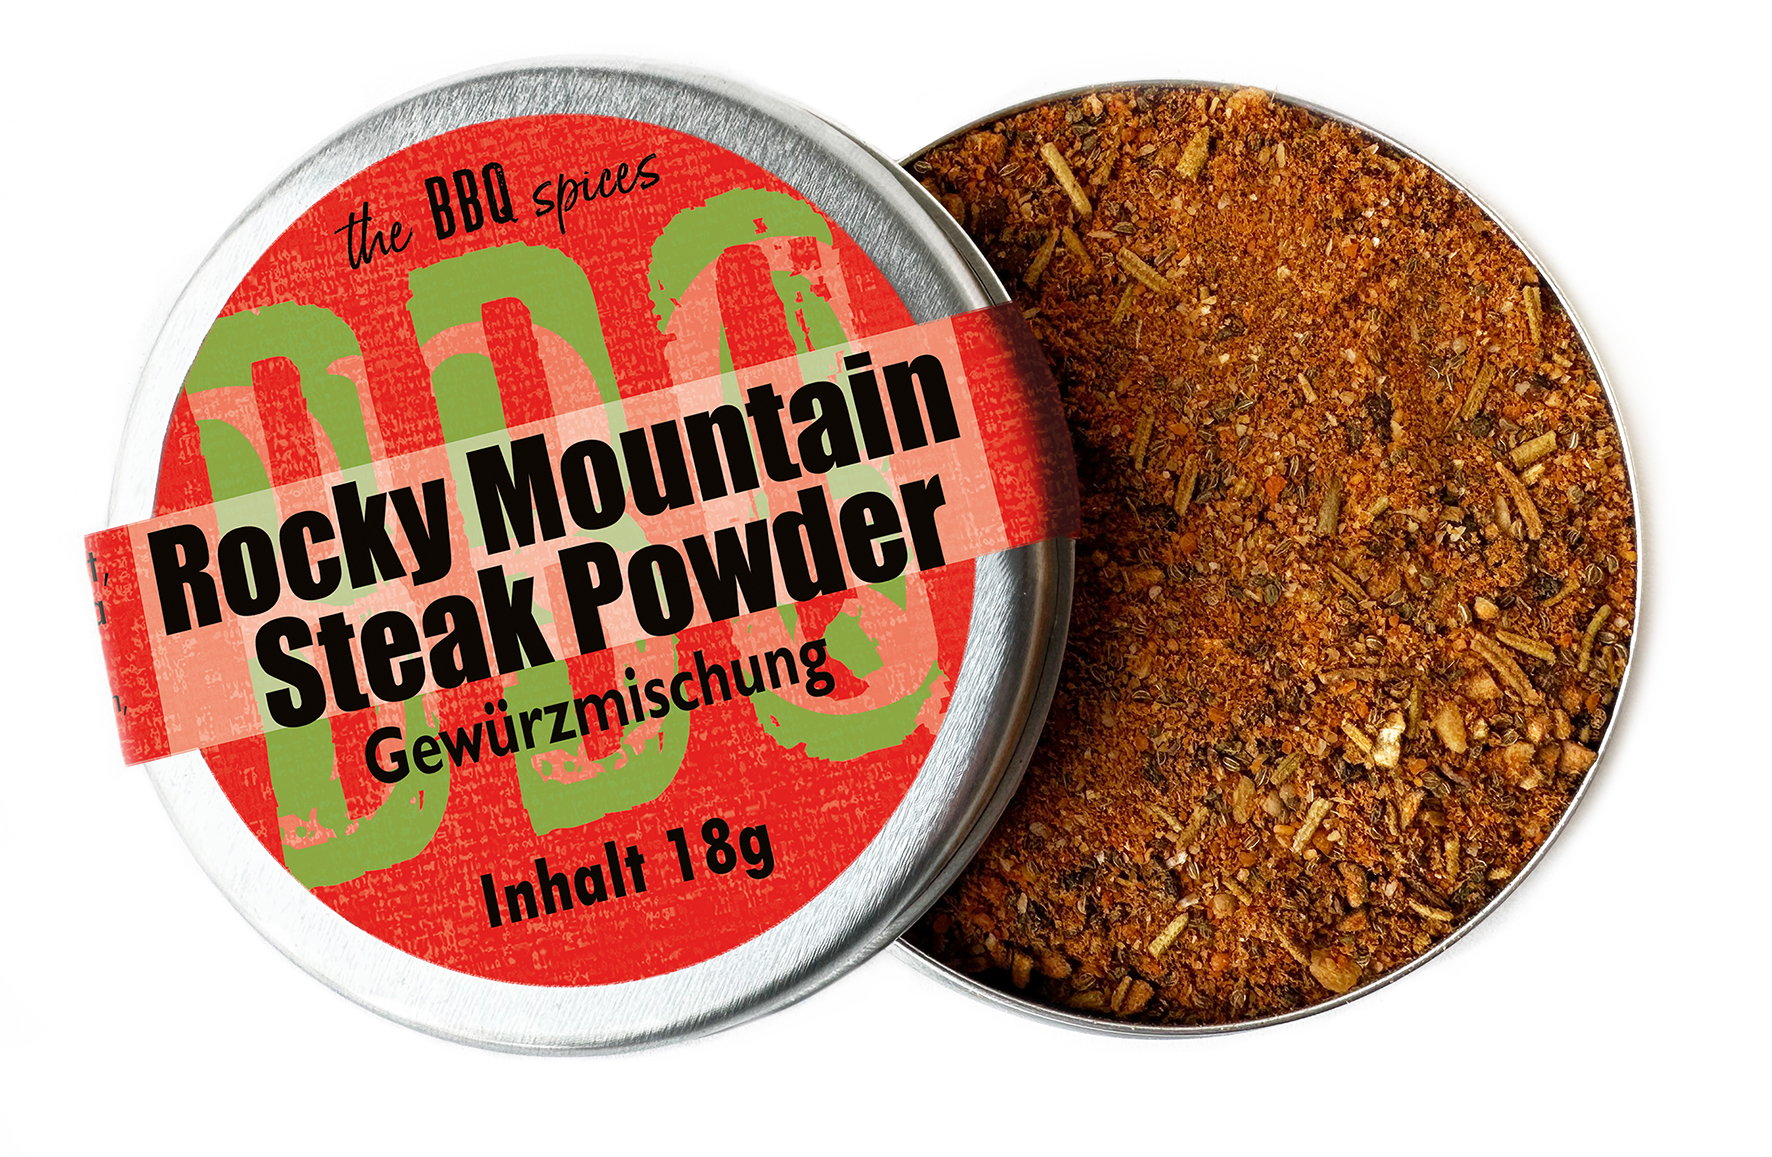 Rocky Mountain Steak Powder